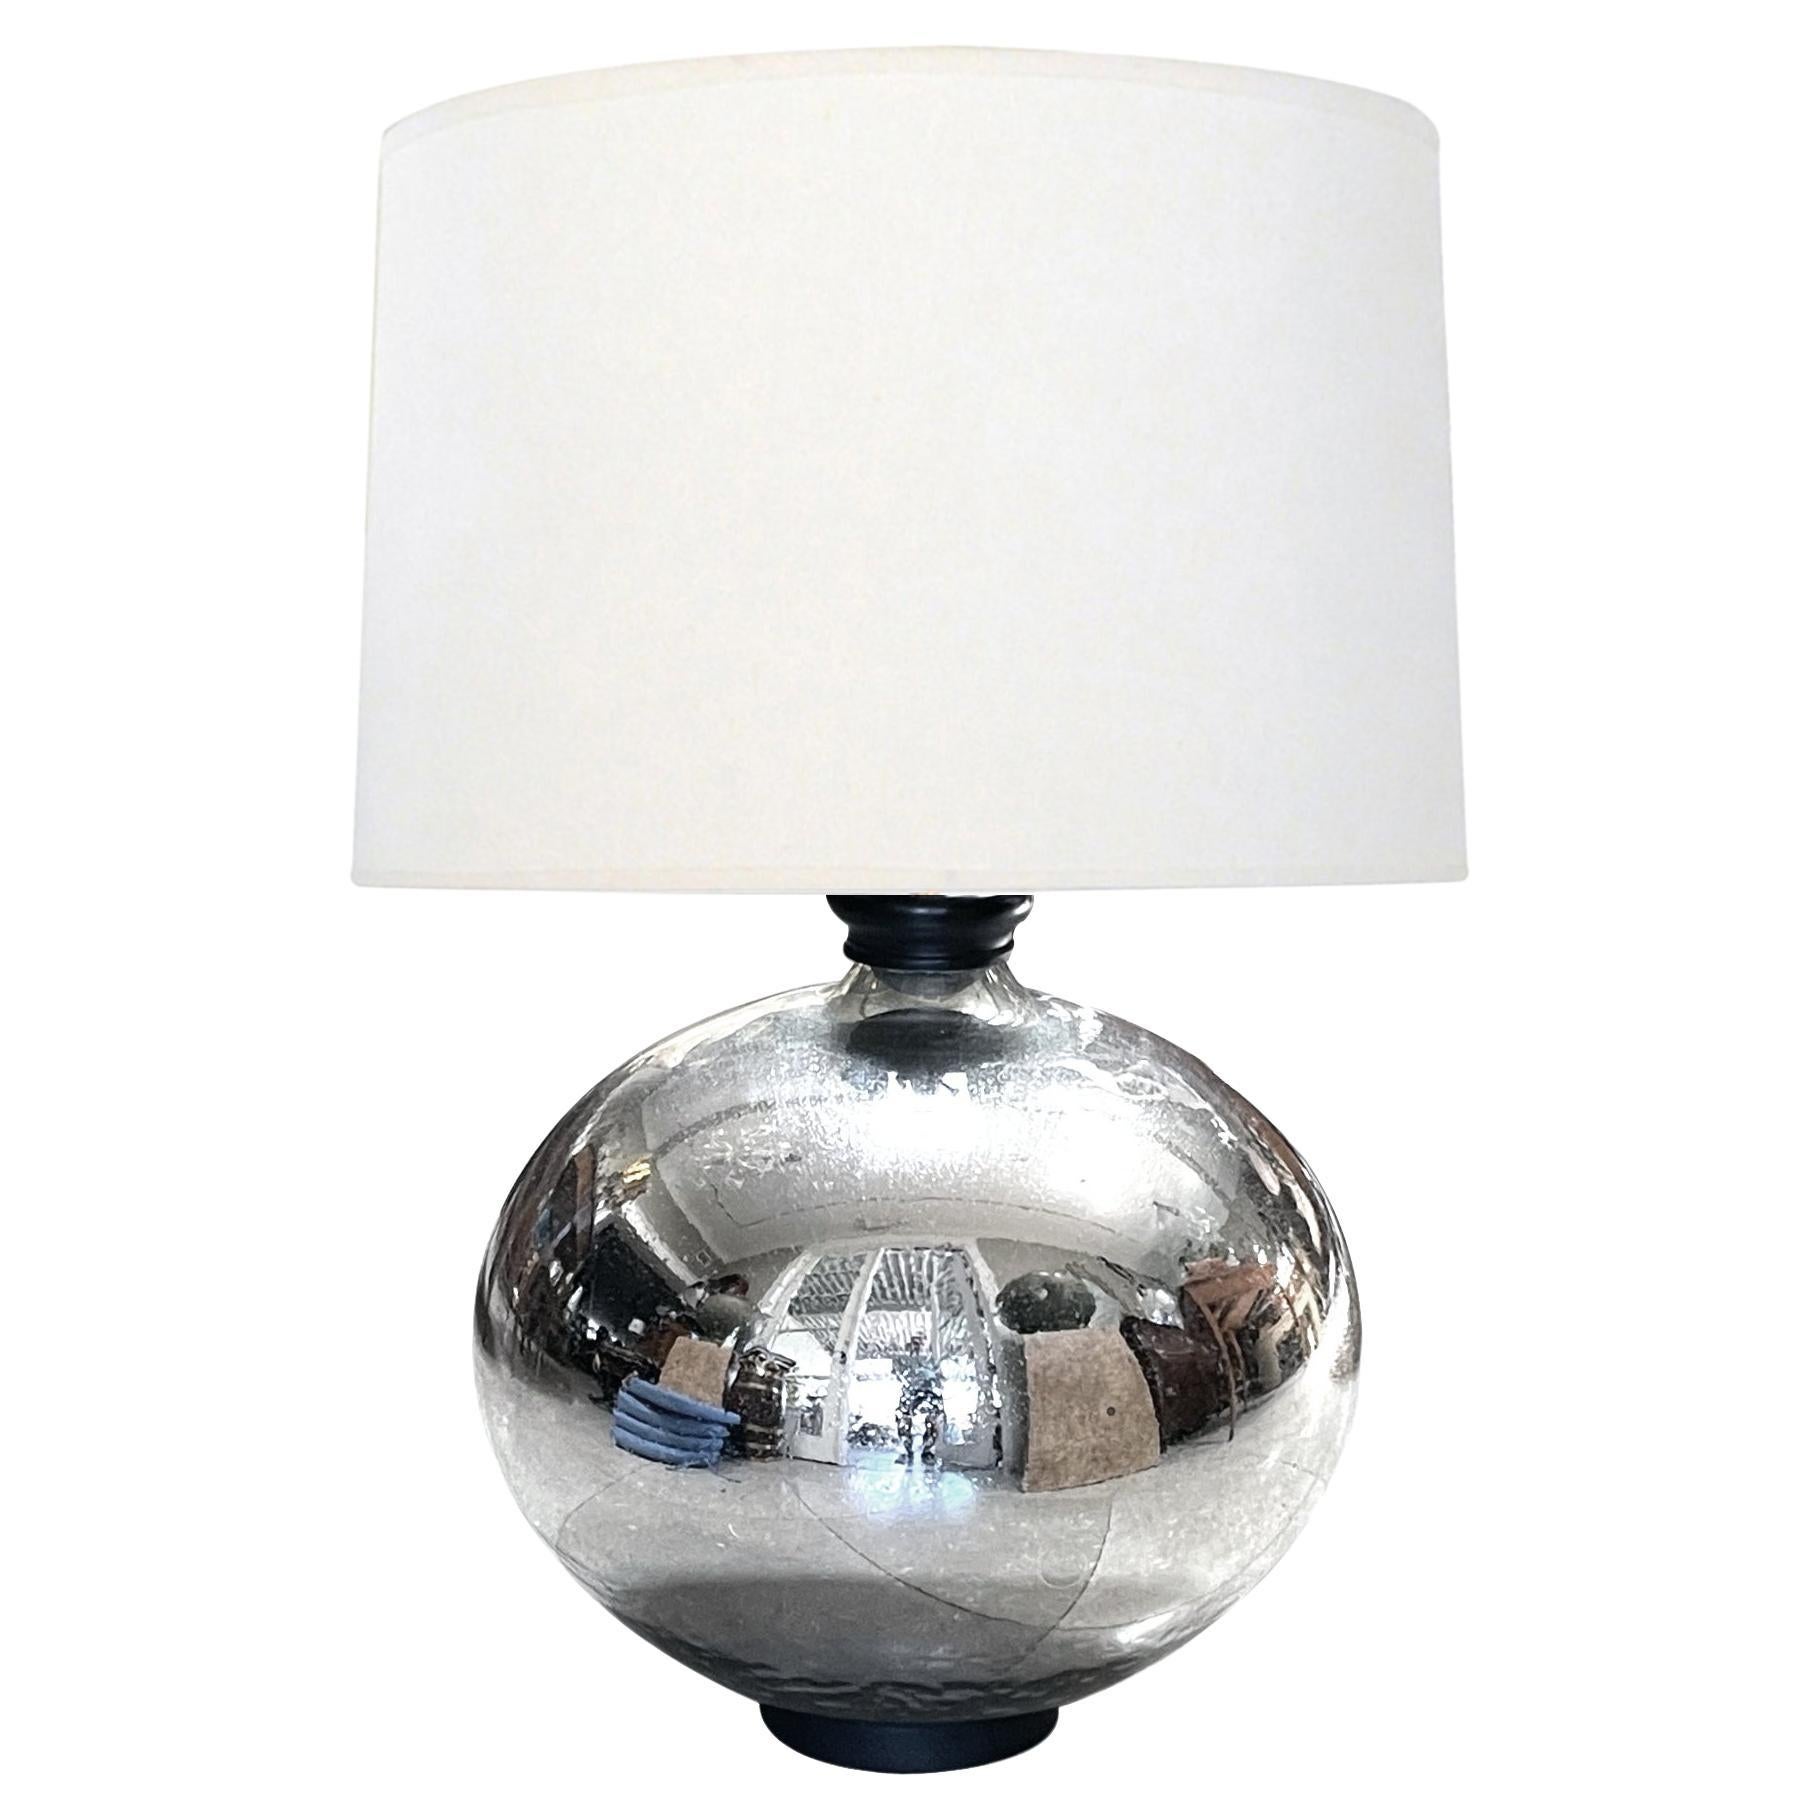 Massive Mercury Glass spheroid Lamp For Sale